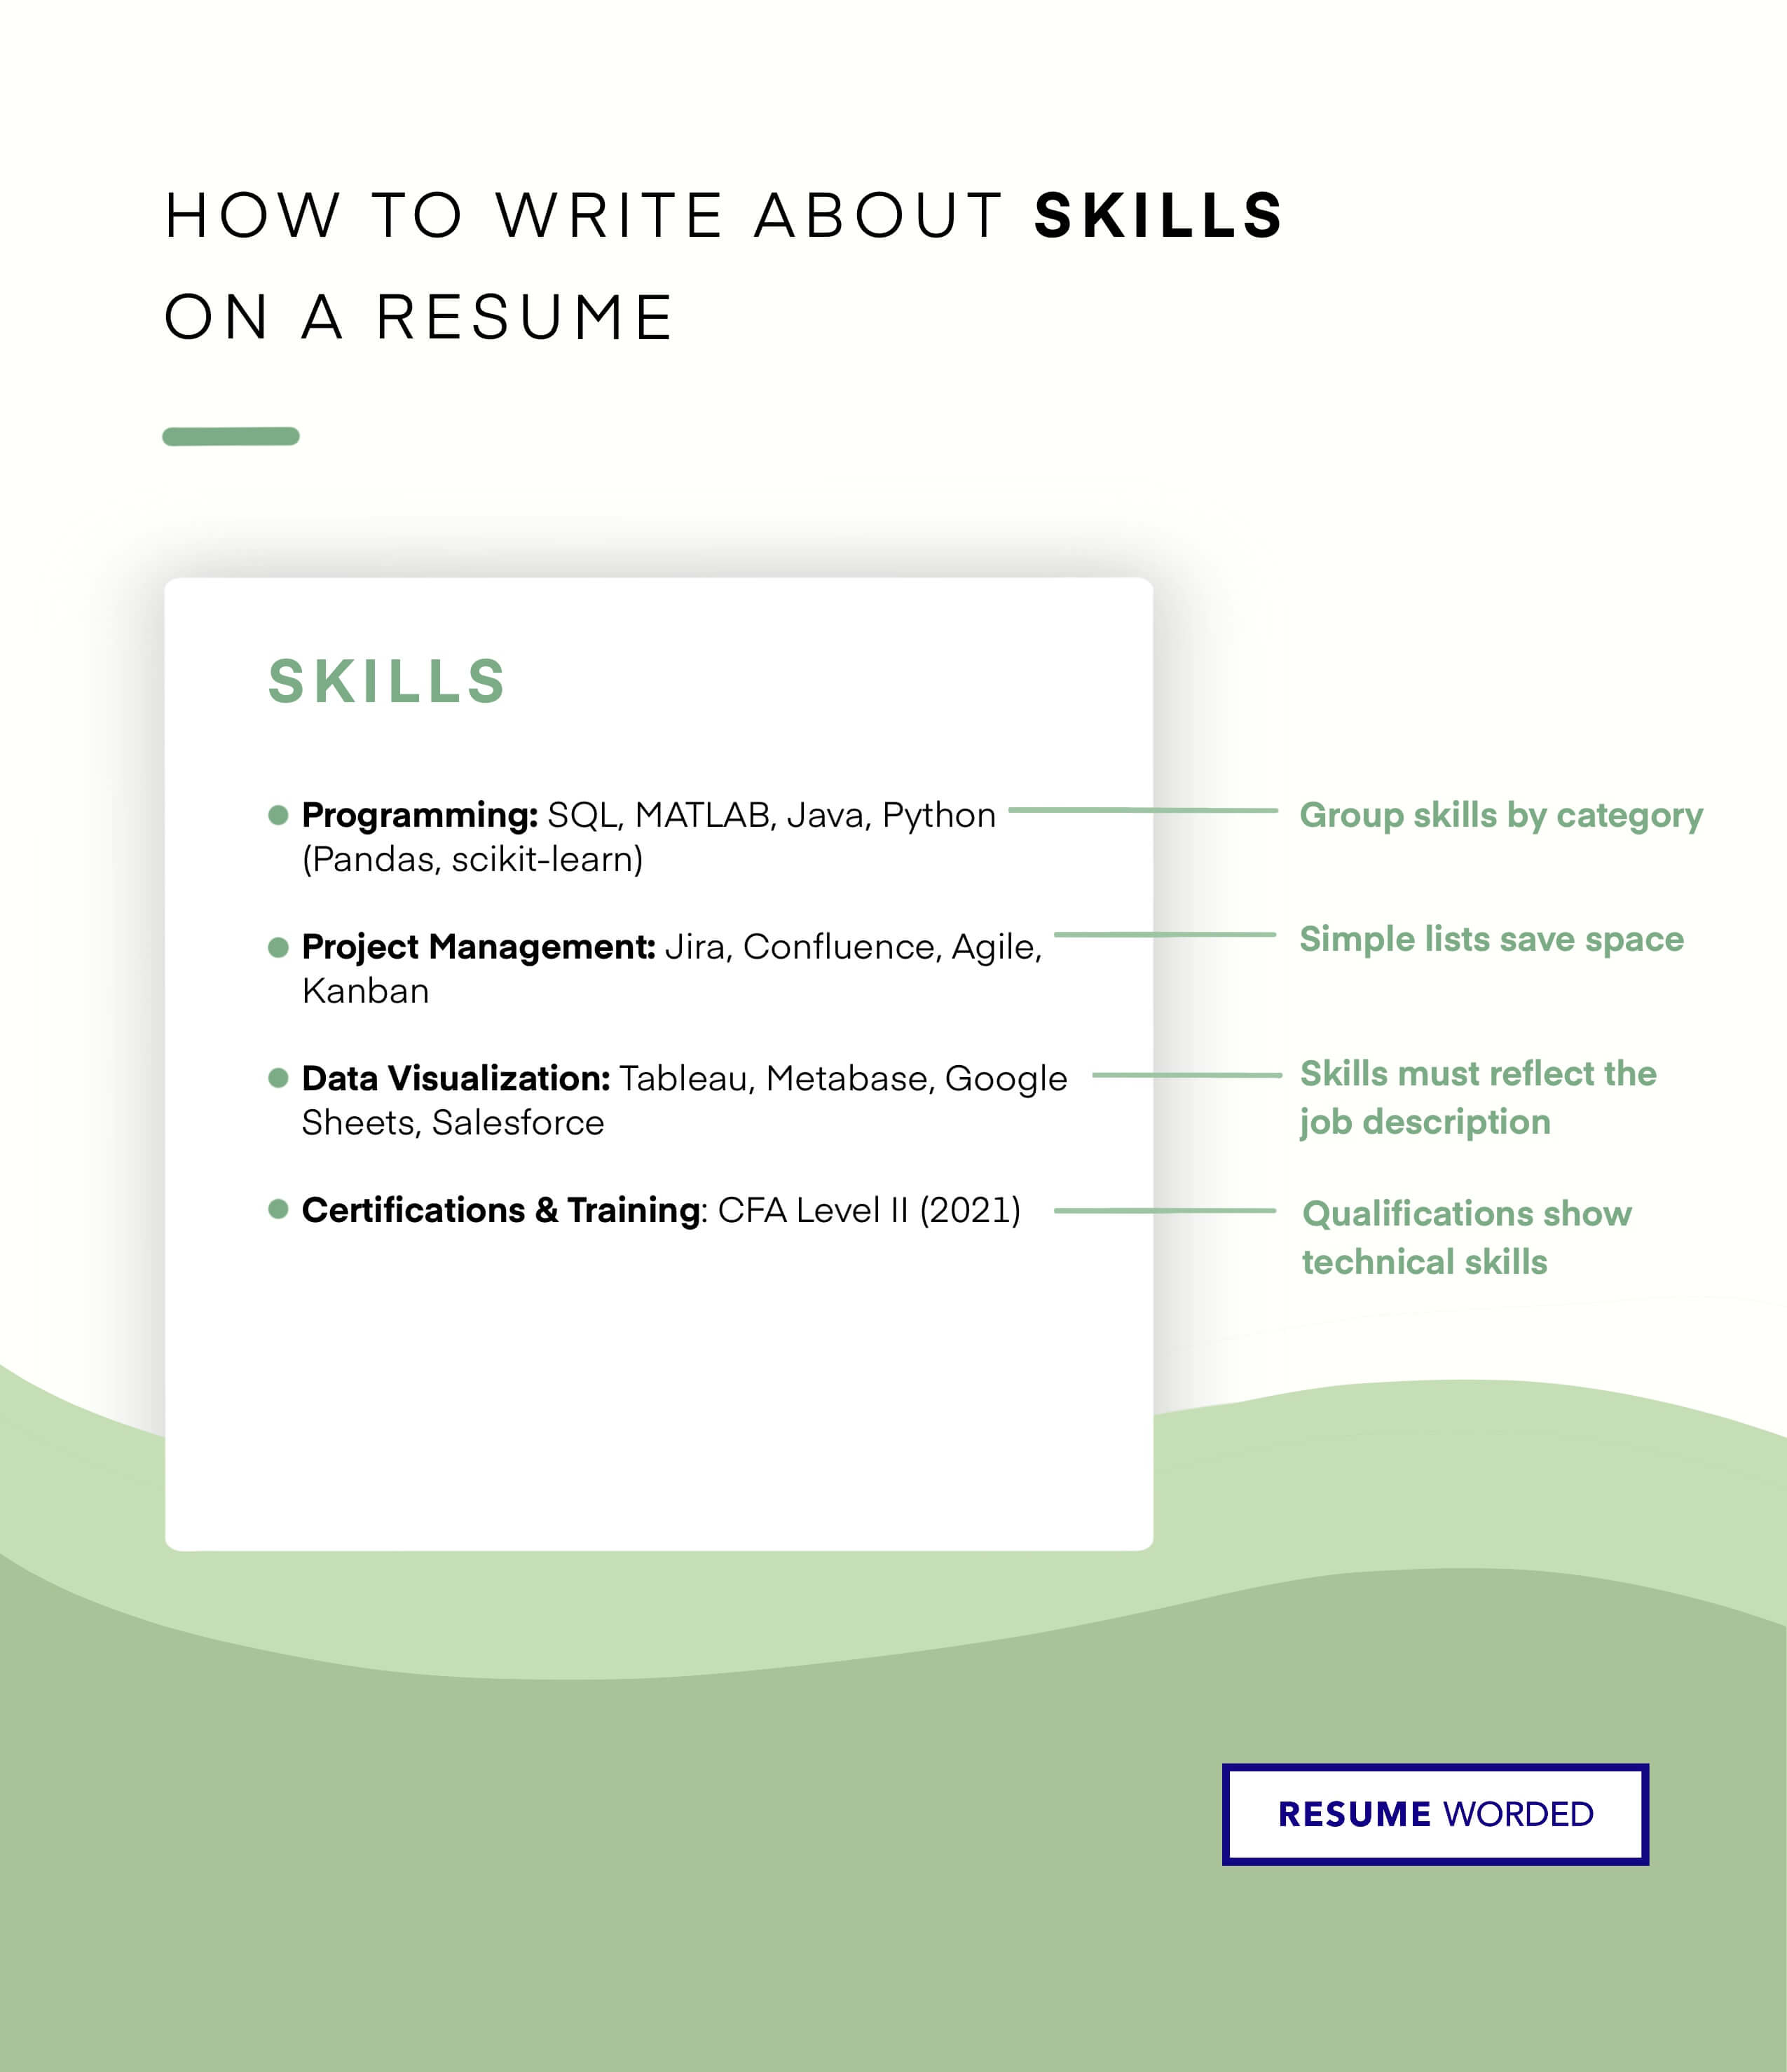 Include both front-end and back-end skills - Entry Level Full Stack Developer CV